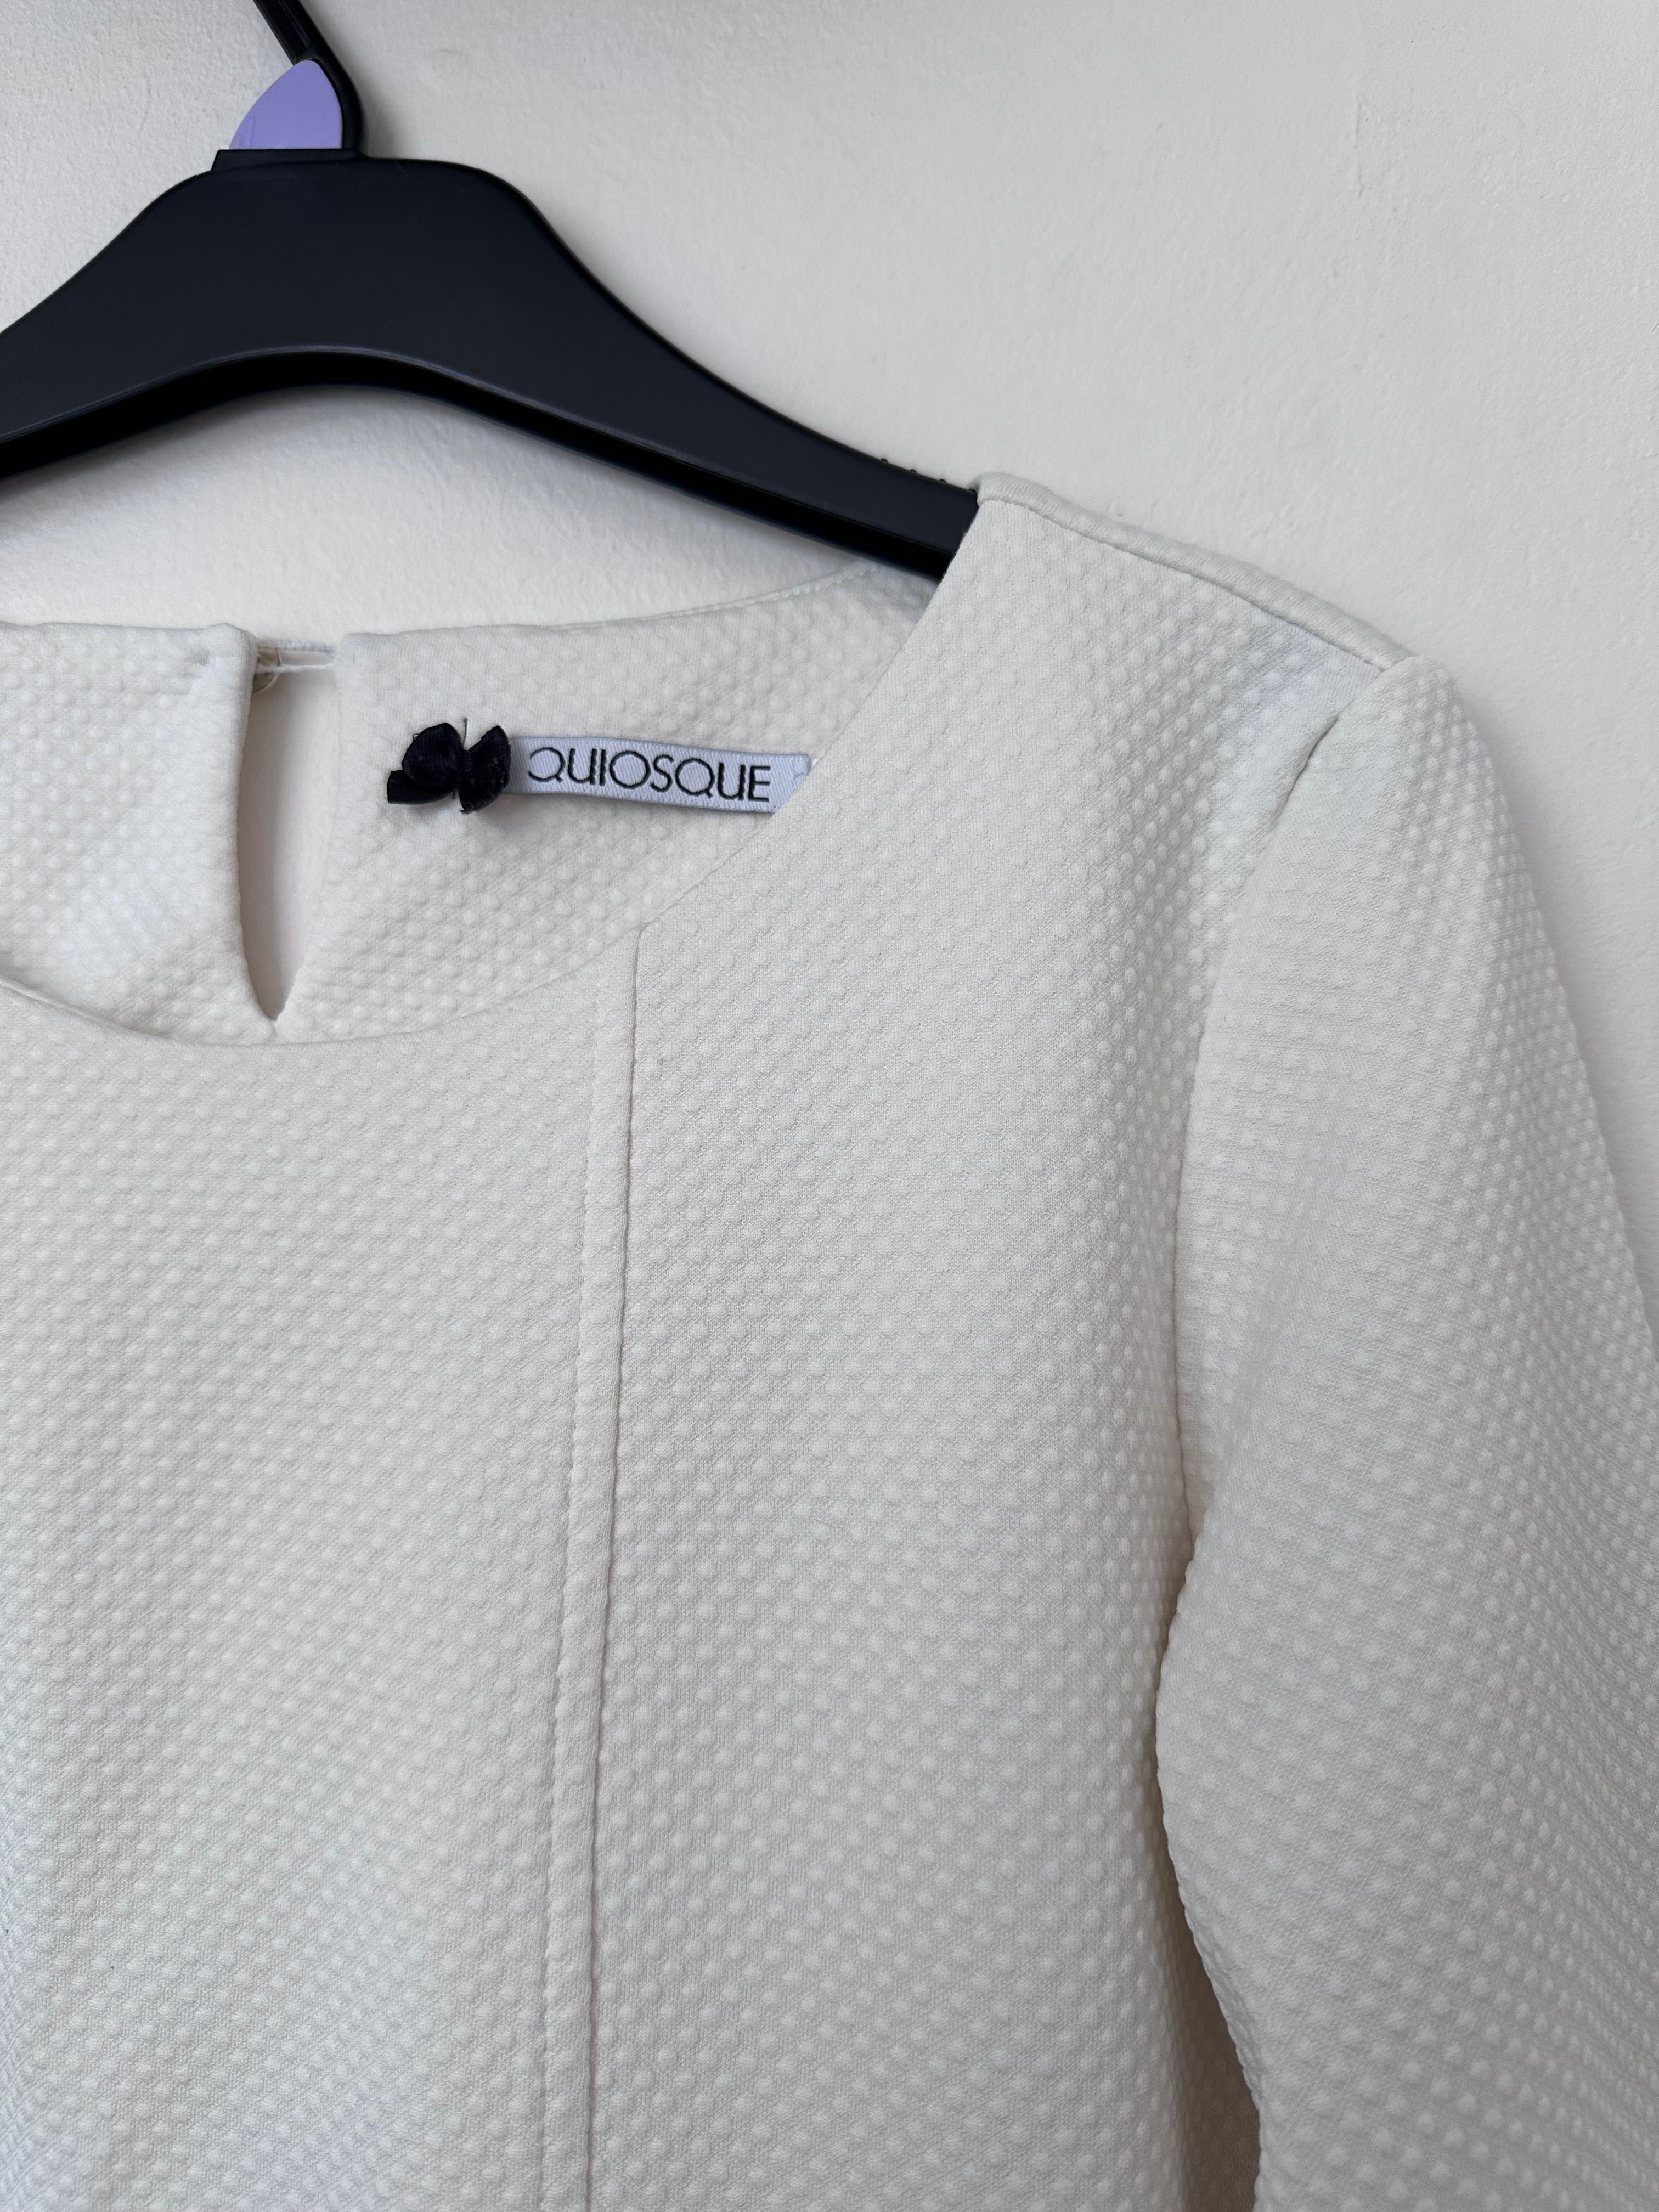 Damska elegancka kremowa bluzka Quiosque rozm 38, używana